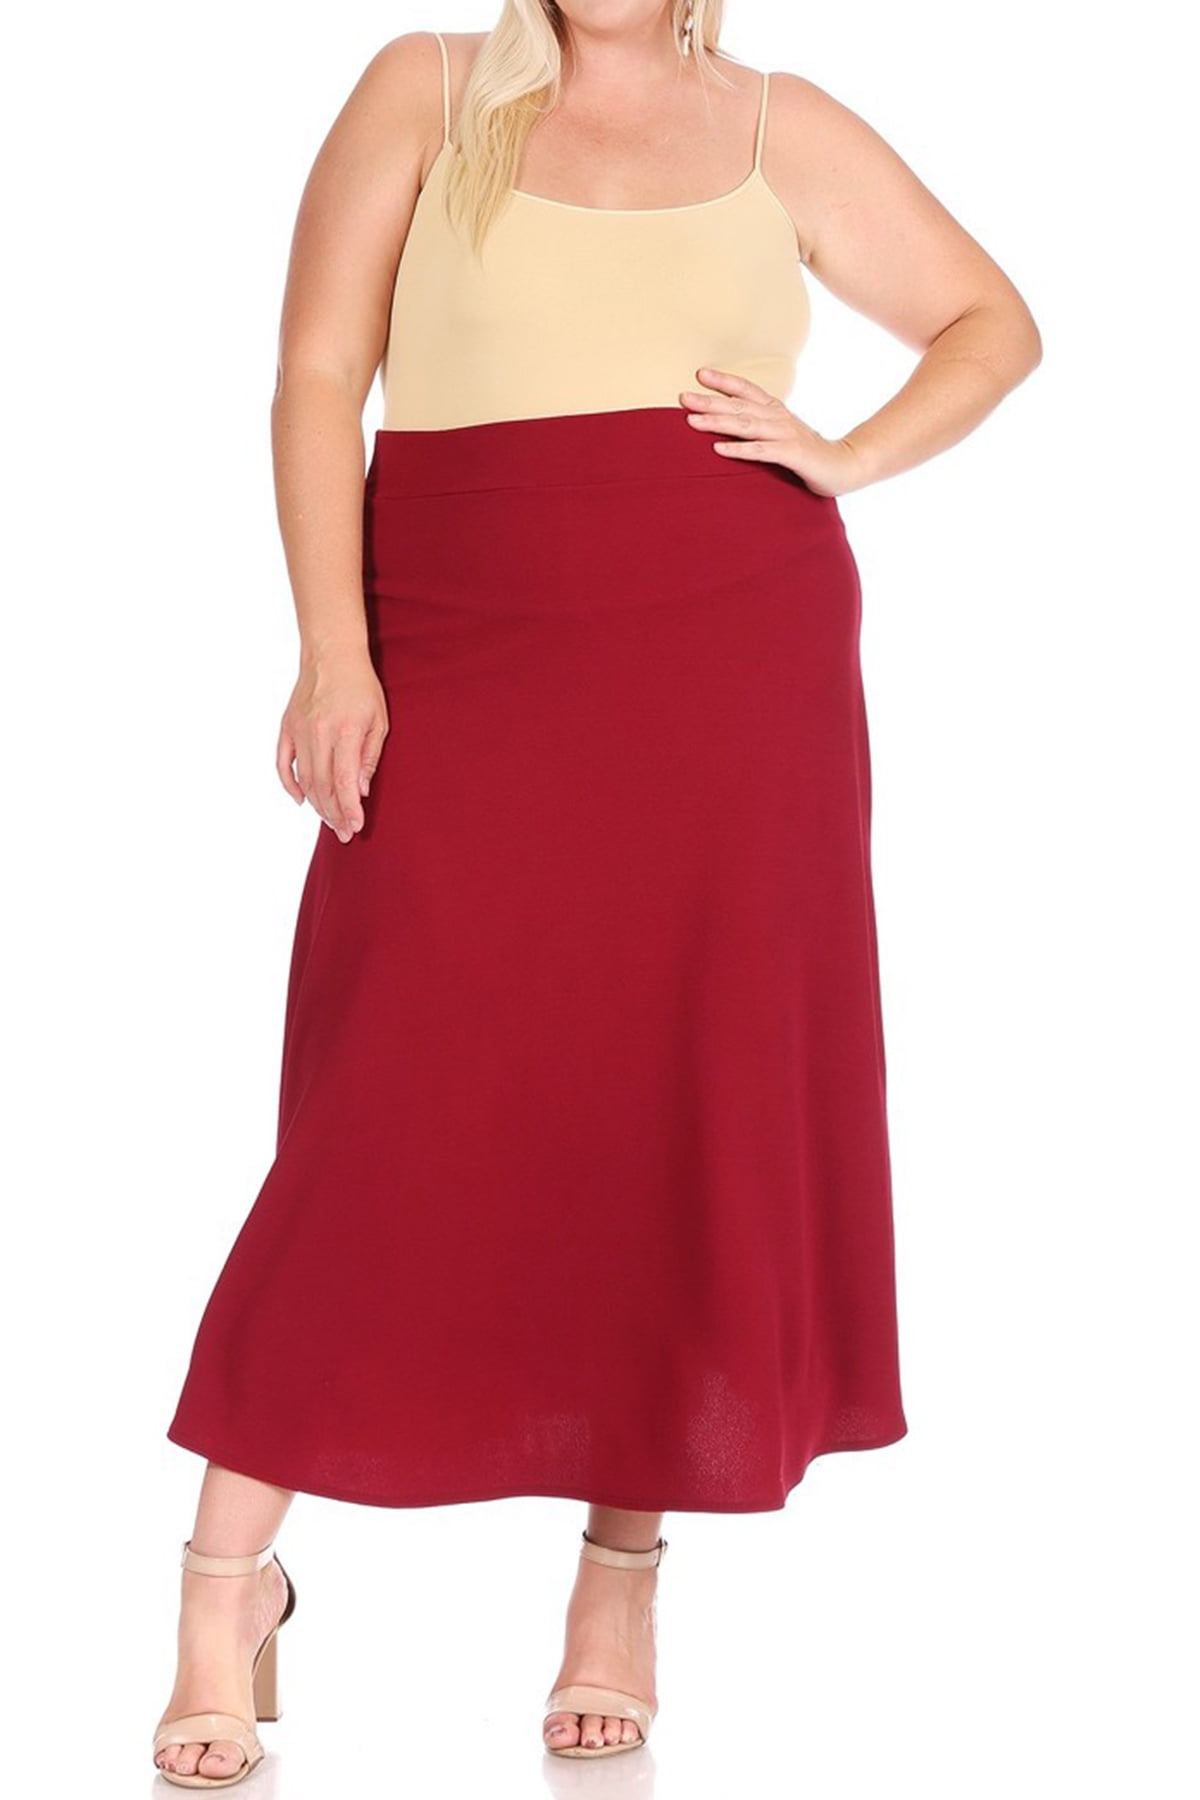 Women's Plus Size Flare A-line Long Skirt with Elastic Waistband -  Walmart.com